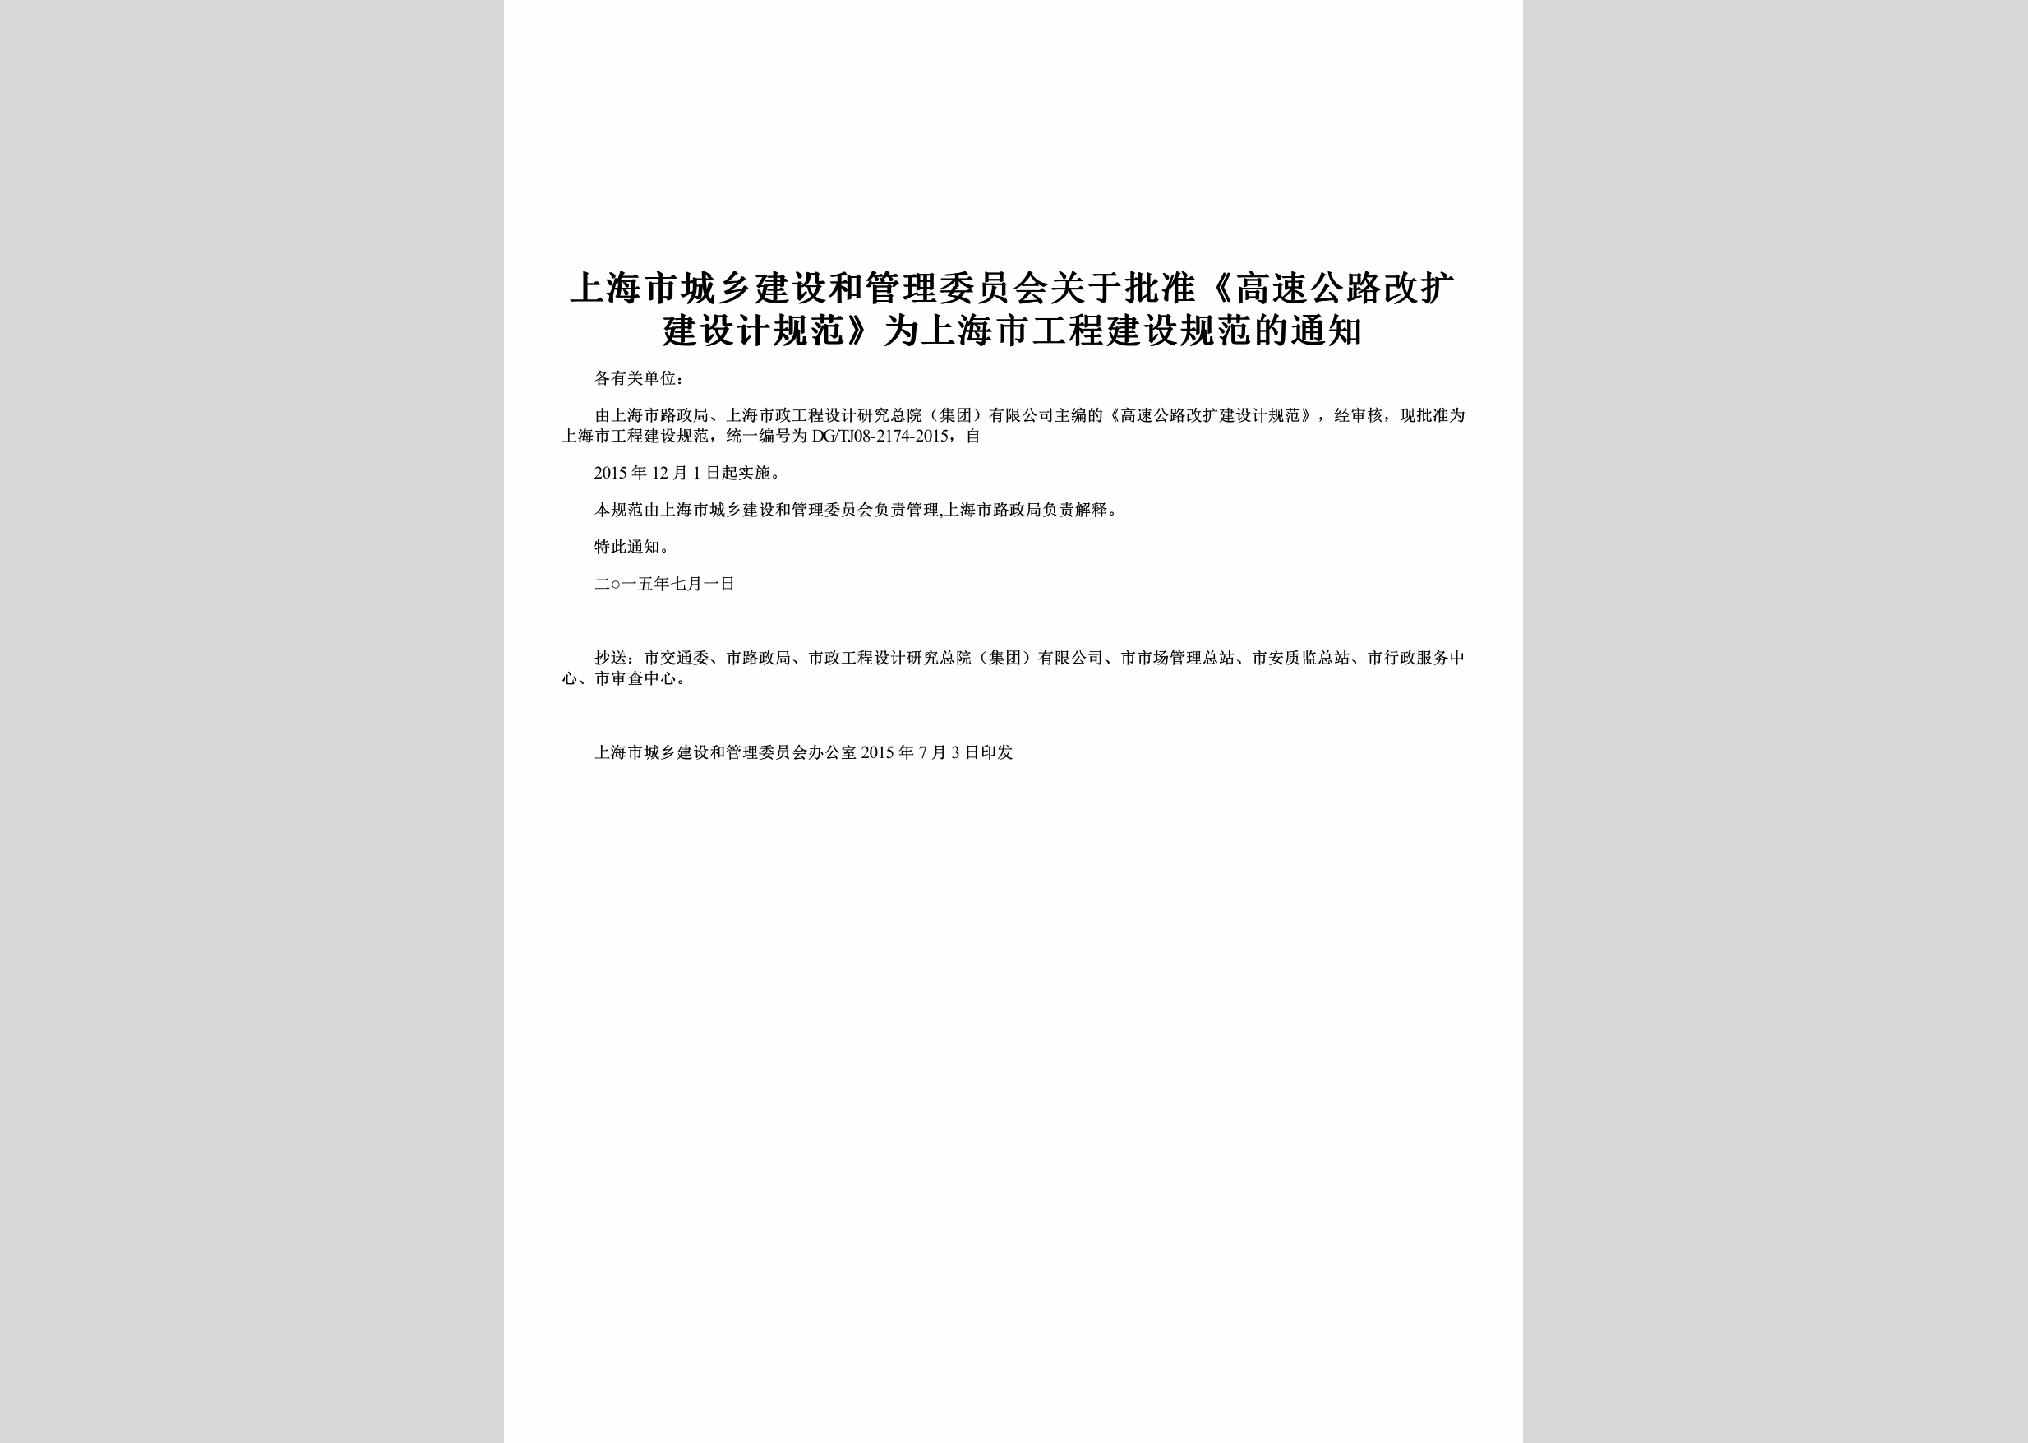 SH-GLKJGFTZ-2015：关于批准《高速公路改扩建设计规范》为上海市工程建设规范的通知